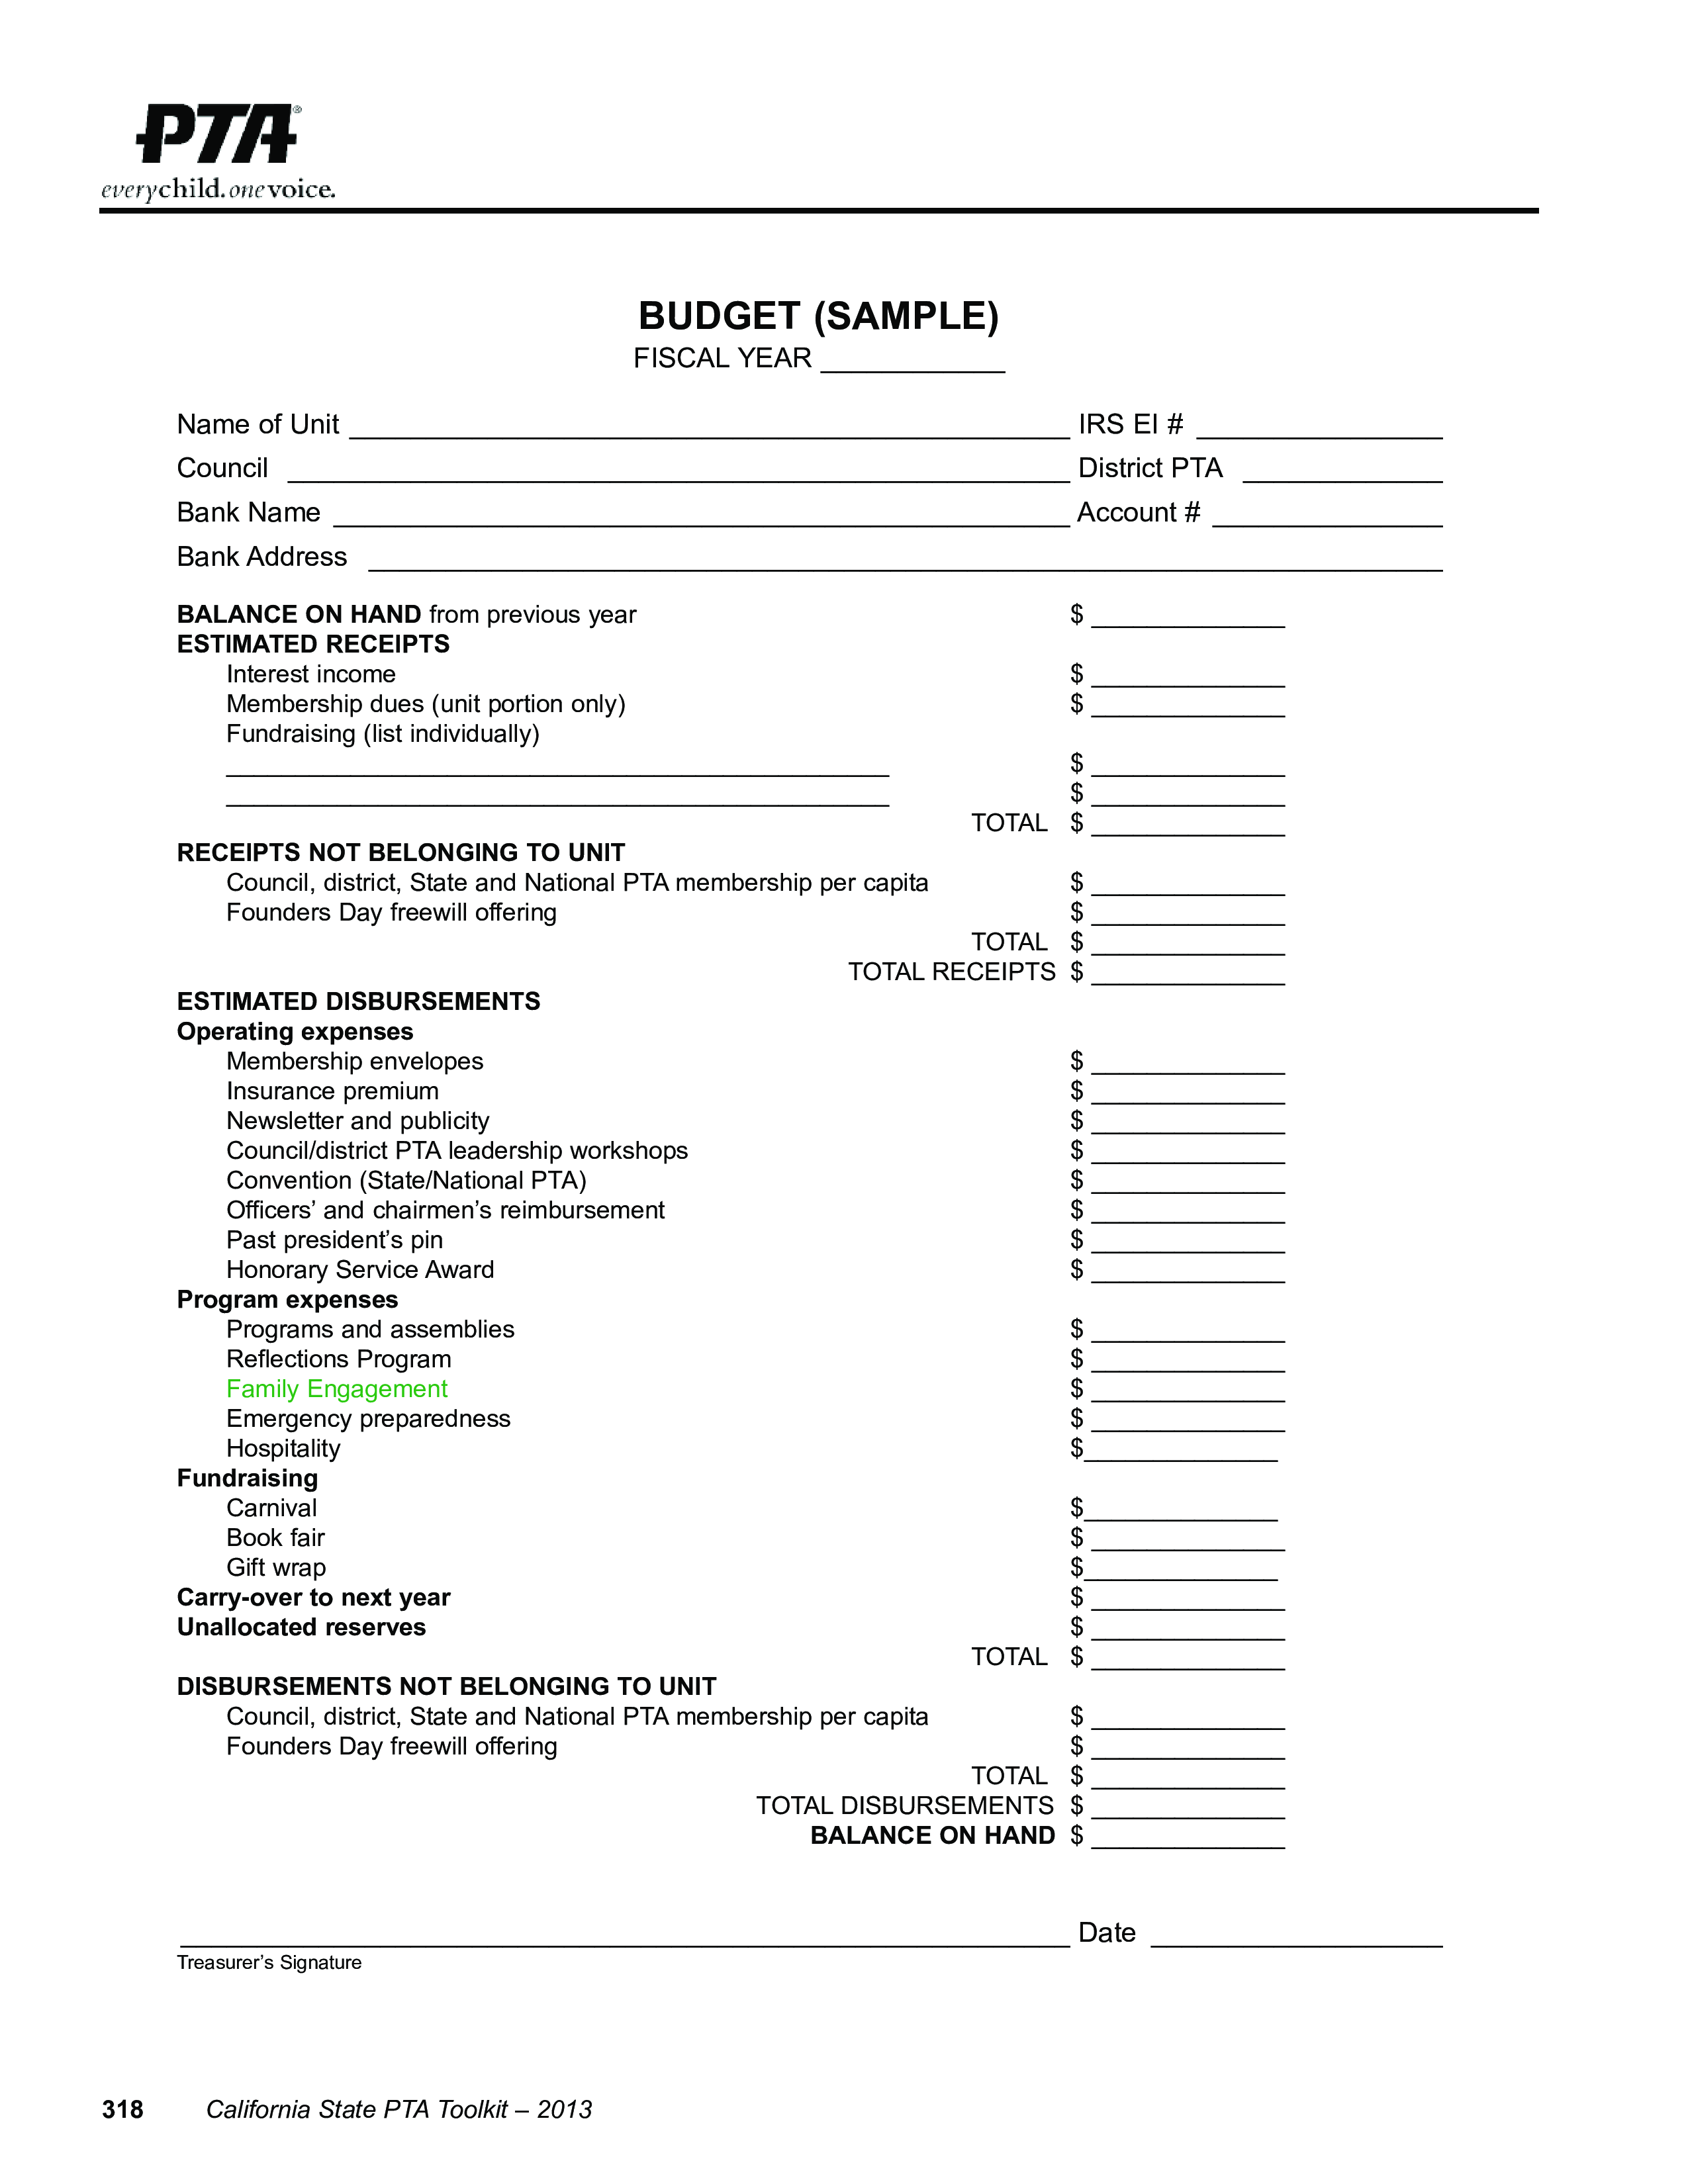 budget sample form plantilla imagen principal